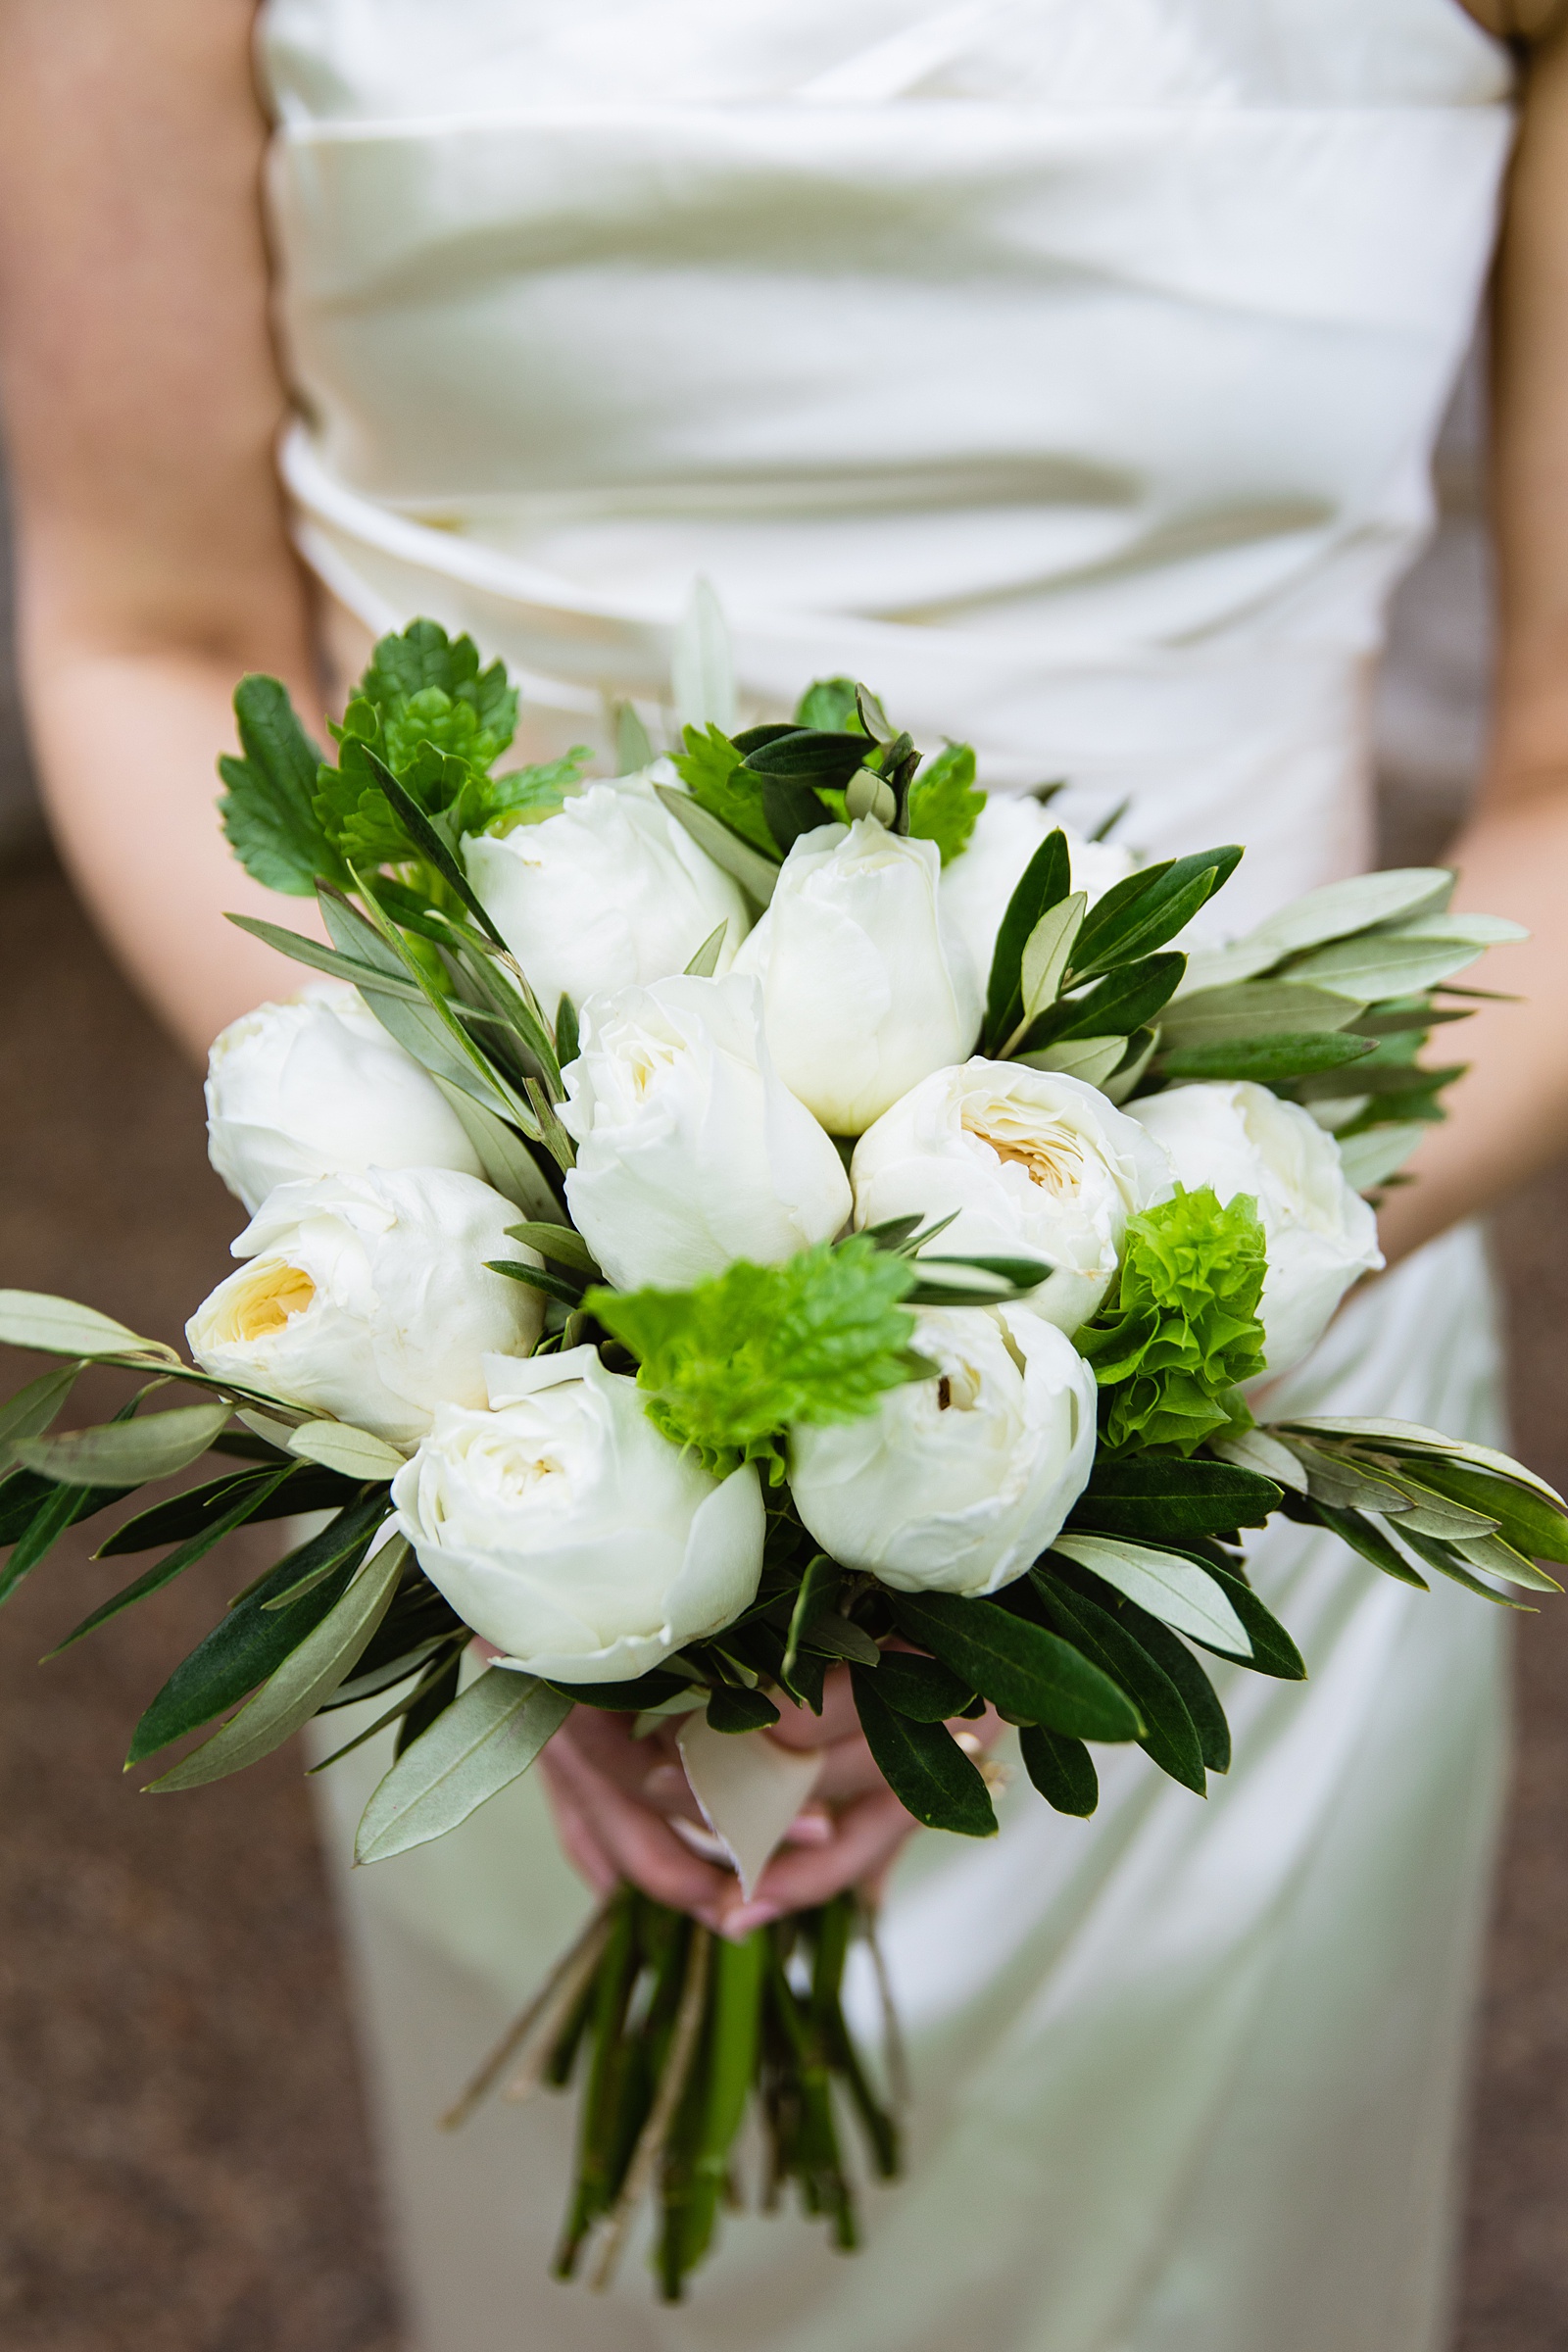 Bride's Irish bouquet by PMA Photography.